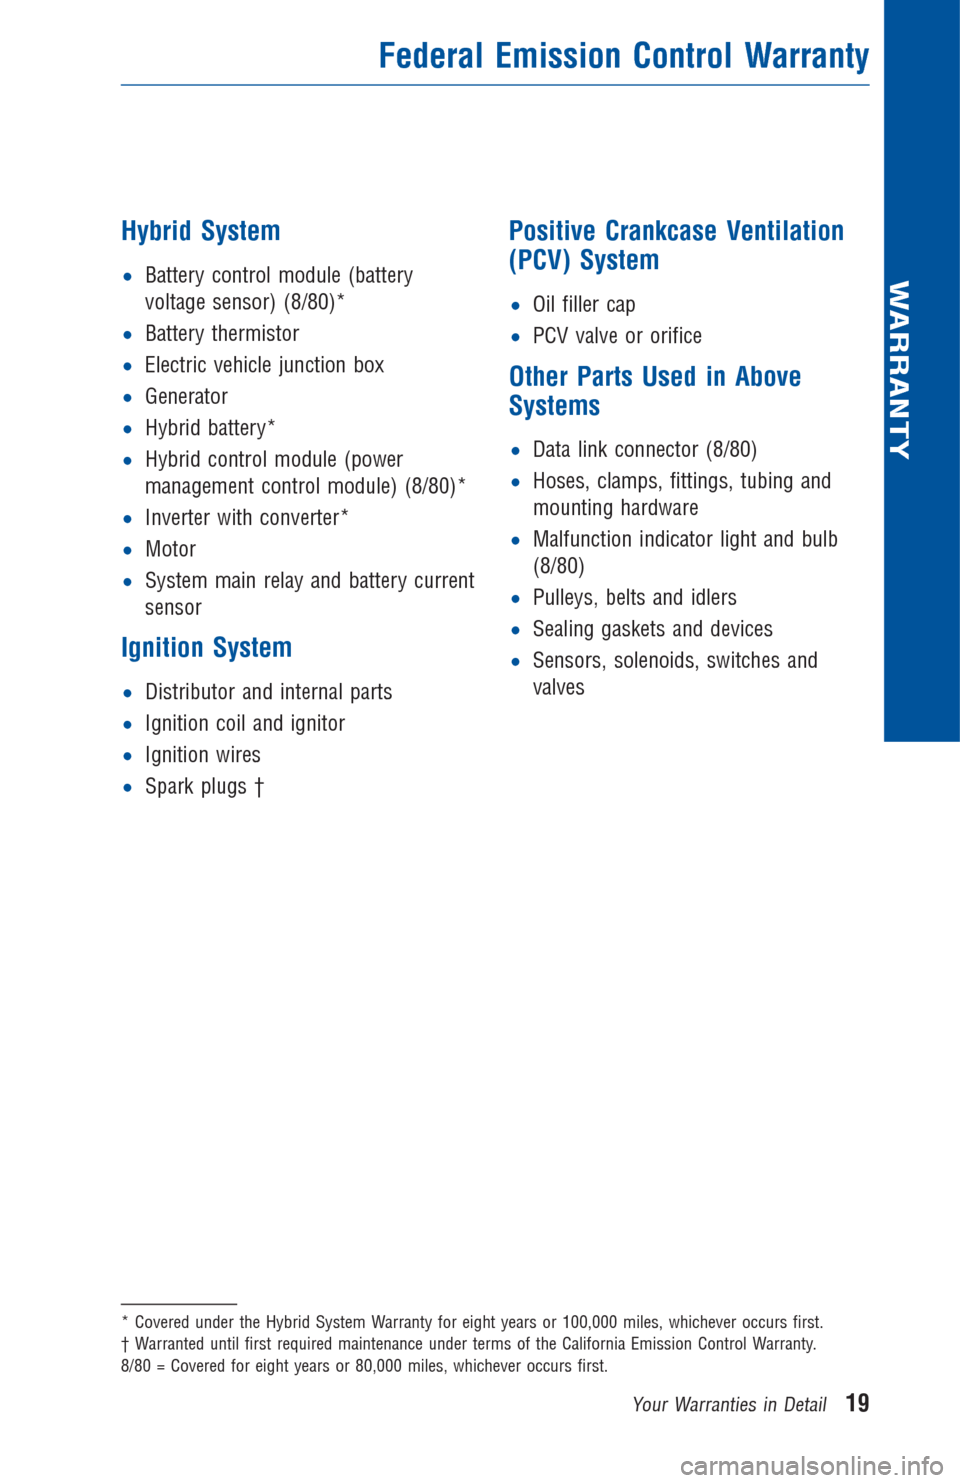 TOYOTA AVALON HYBRID 2016 XX40 / 4.G Warranty And Maintenance Guide Hybrid System
•Battery control module (battery
voltage sensor) (8/80)*
•Battery thermistor
•Electric vehicle junction box
•Generator
•Hybrid battery*
•Hybrid control module (power
manageme